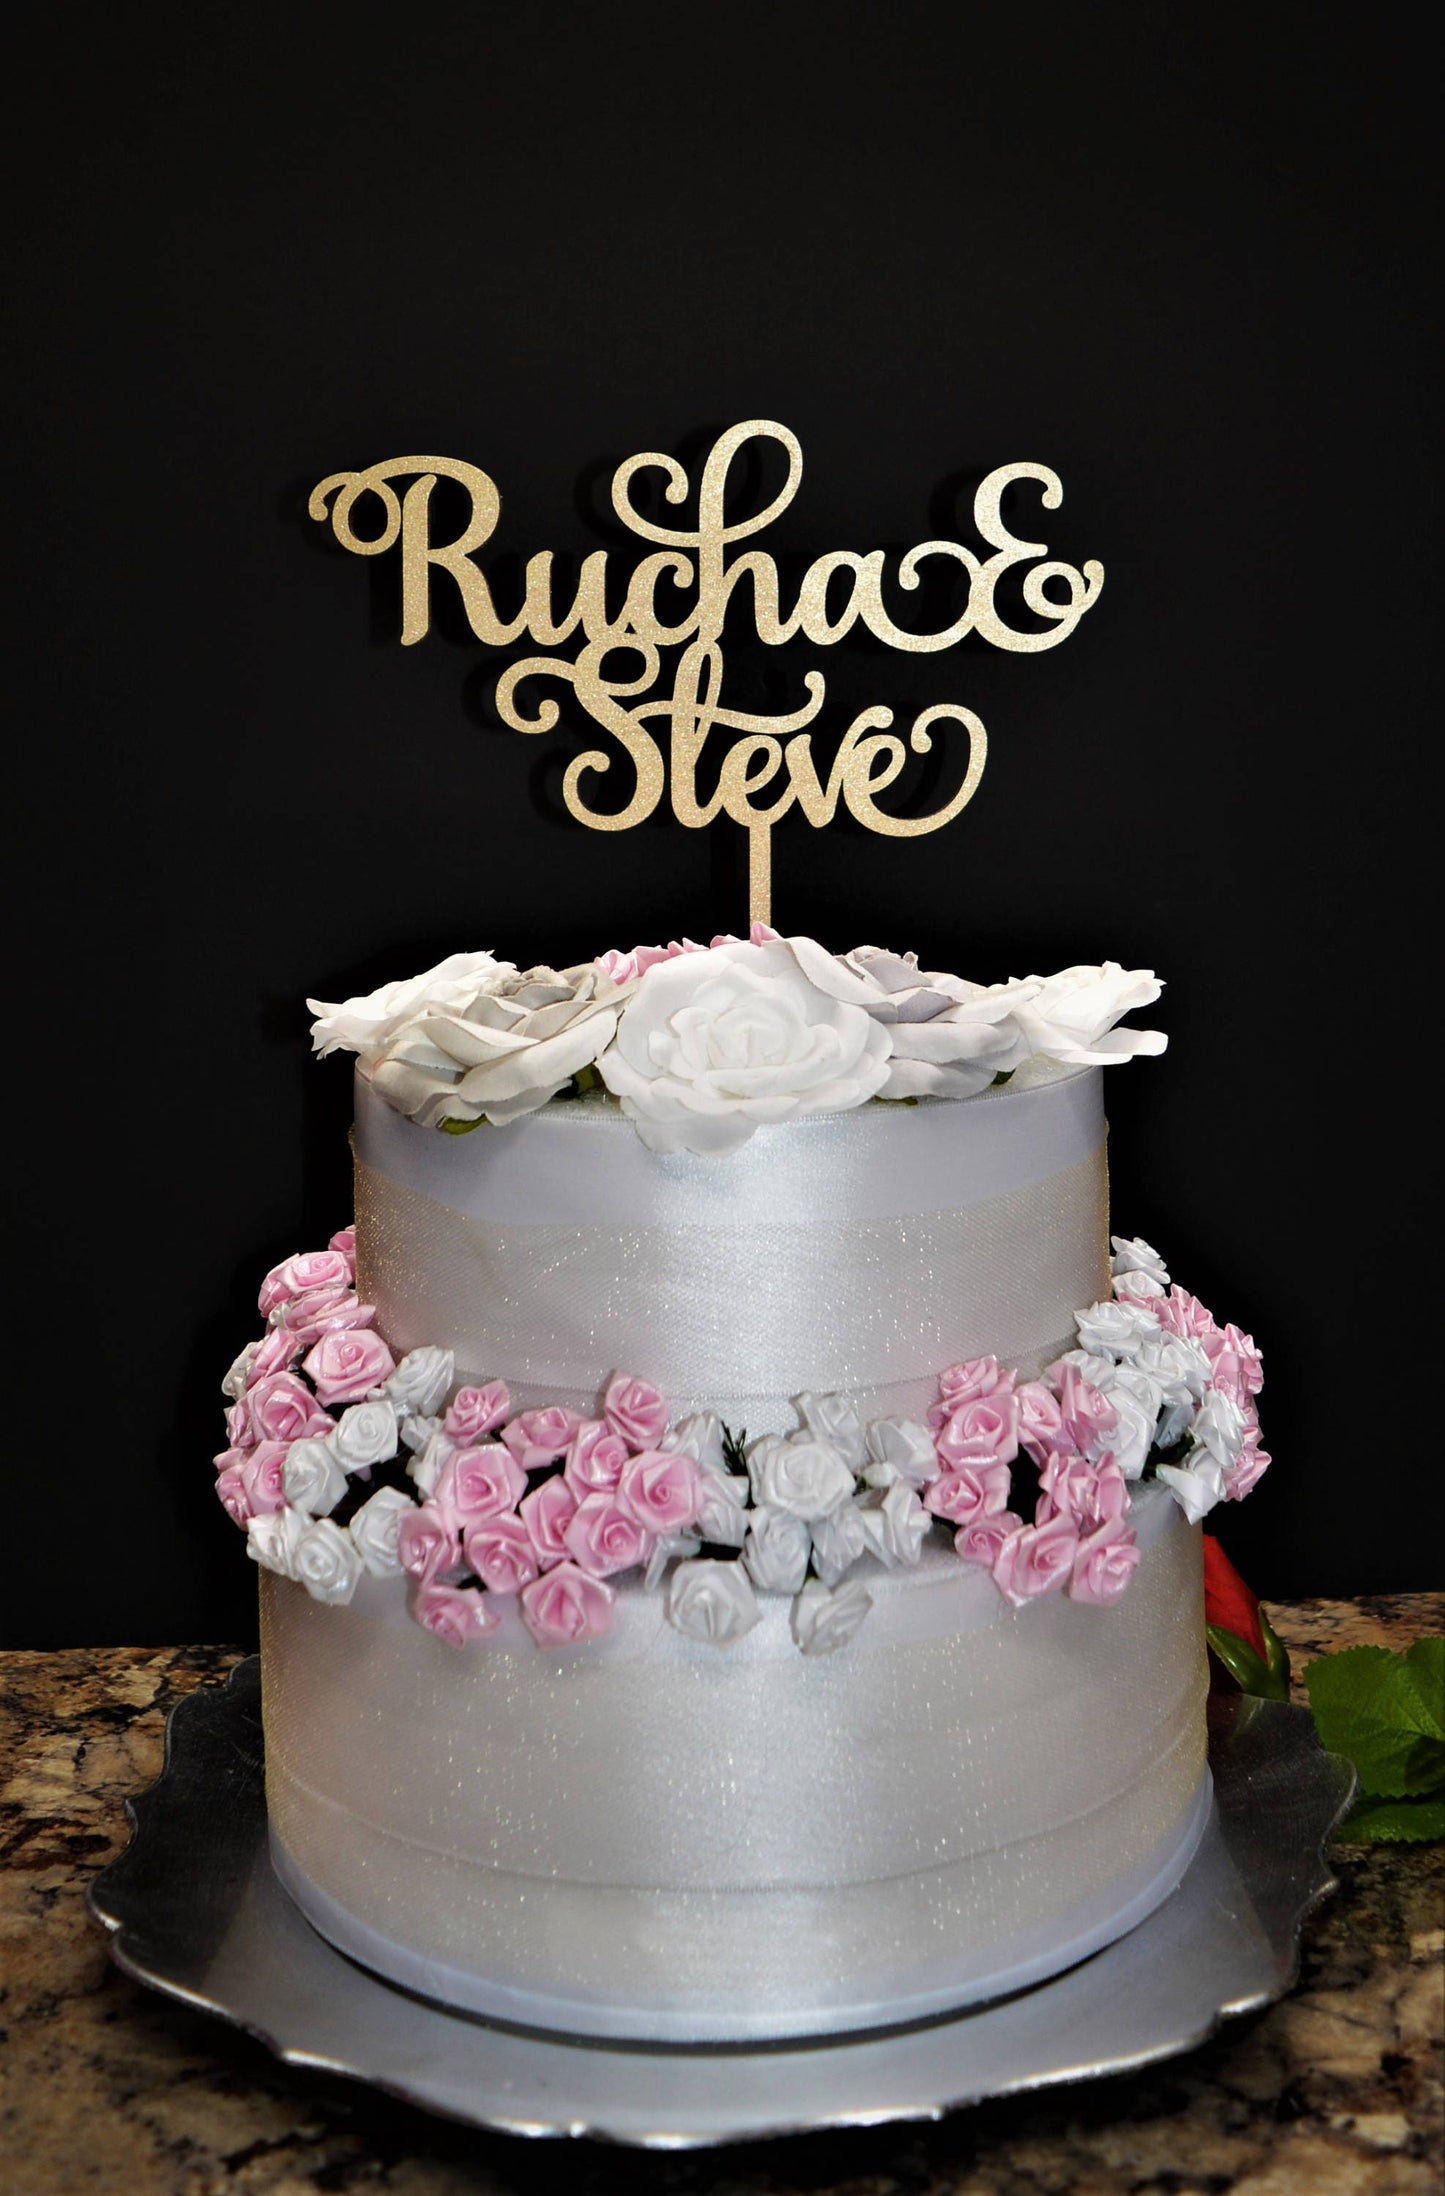 Personalized Wedding Cake topper / Custom Name Wedding Cake Topper / Wood Wedding Cake topper / Personalized Name Cake Topper / Wedding Name